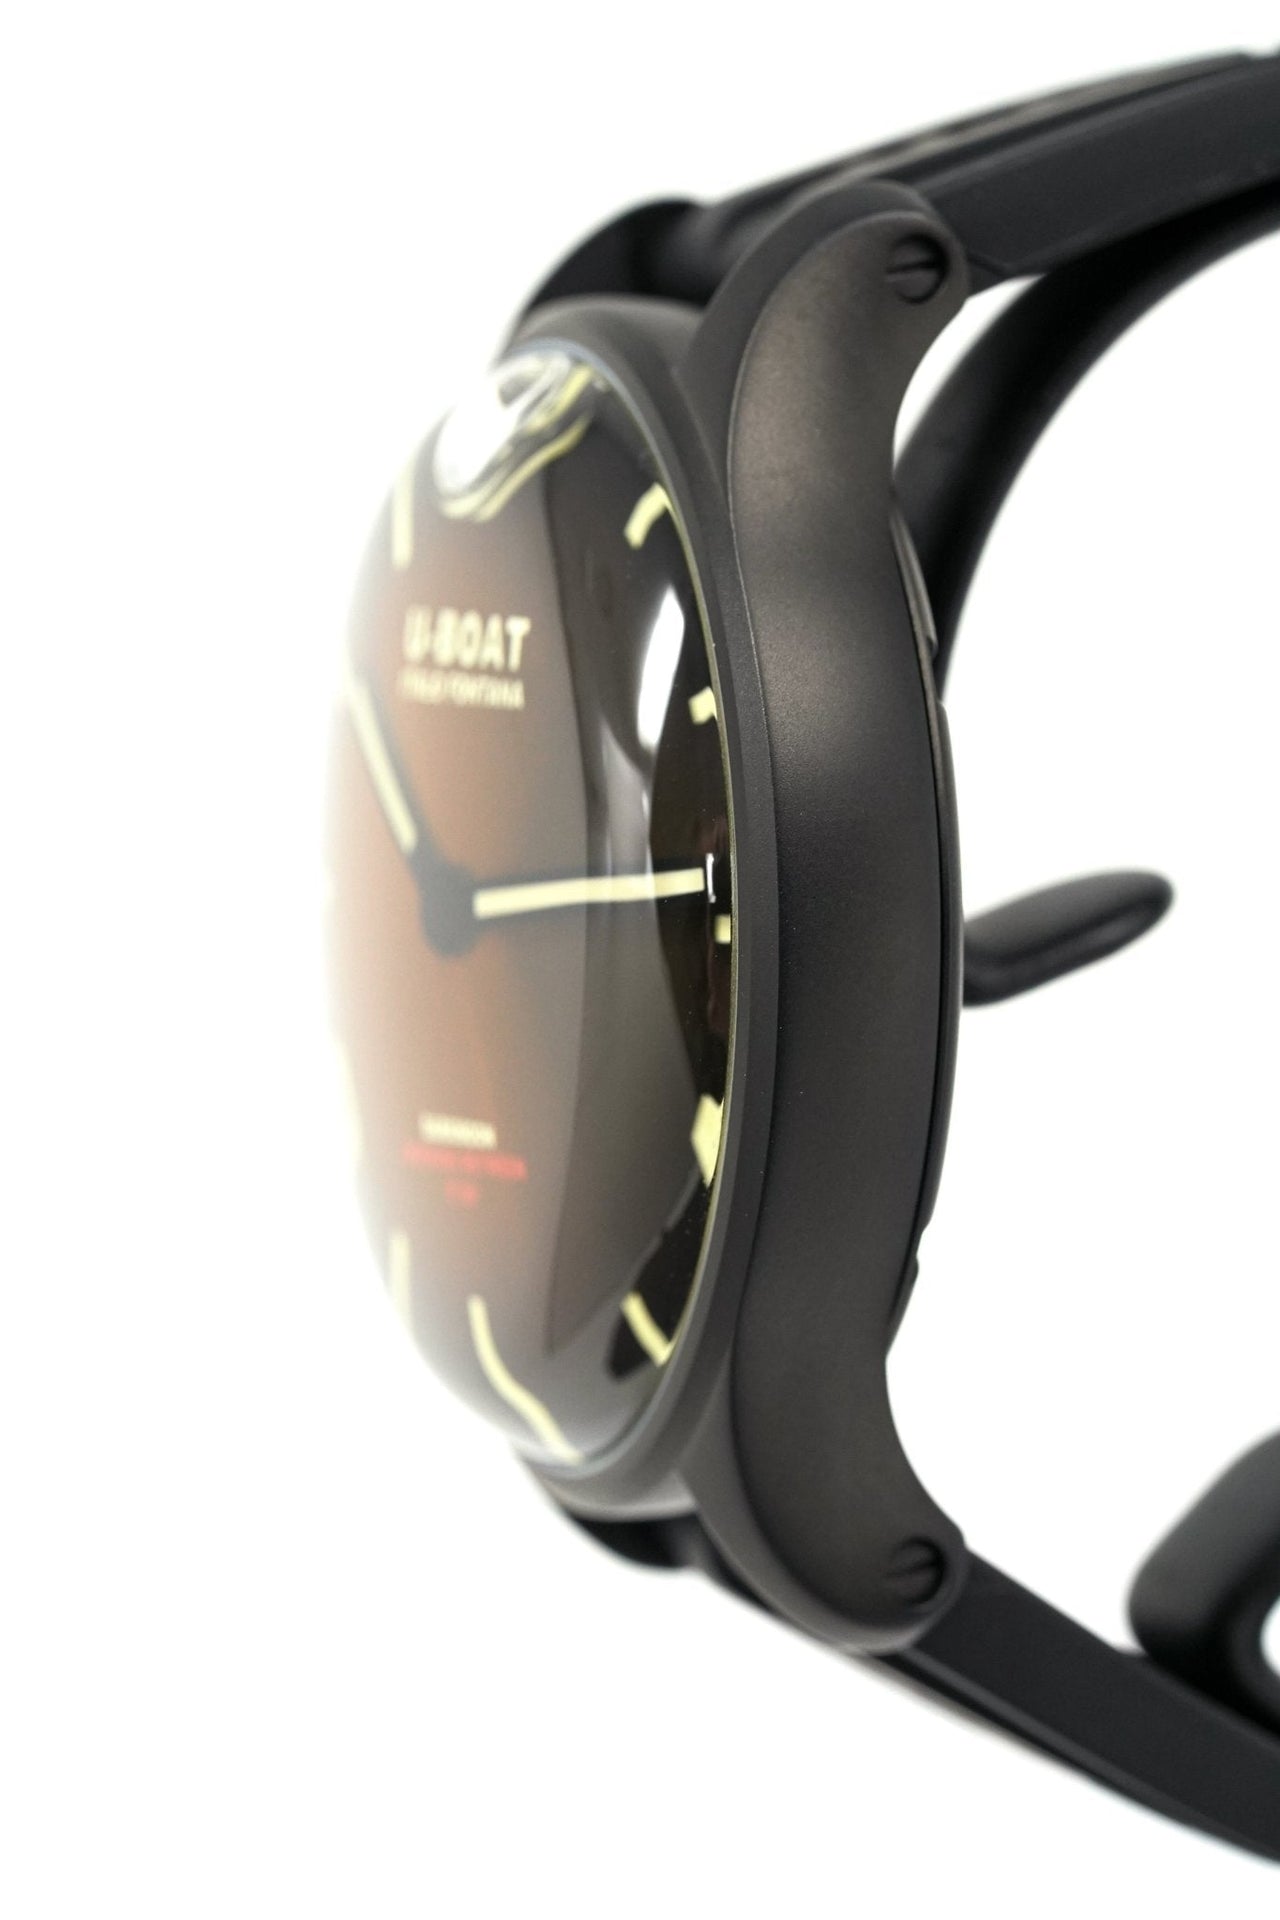 U-Boat Darkmoon 44 Elegant Brown IP Black - 2022 EDITION 8699/B - Watches & Crystals